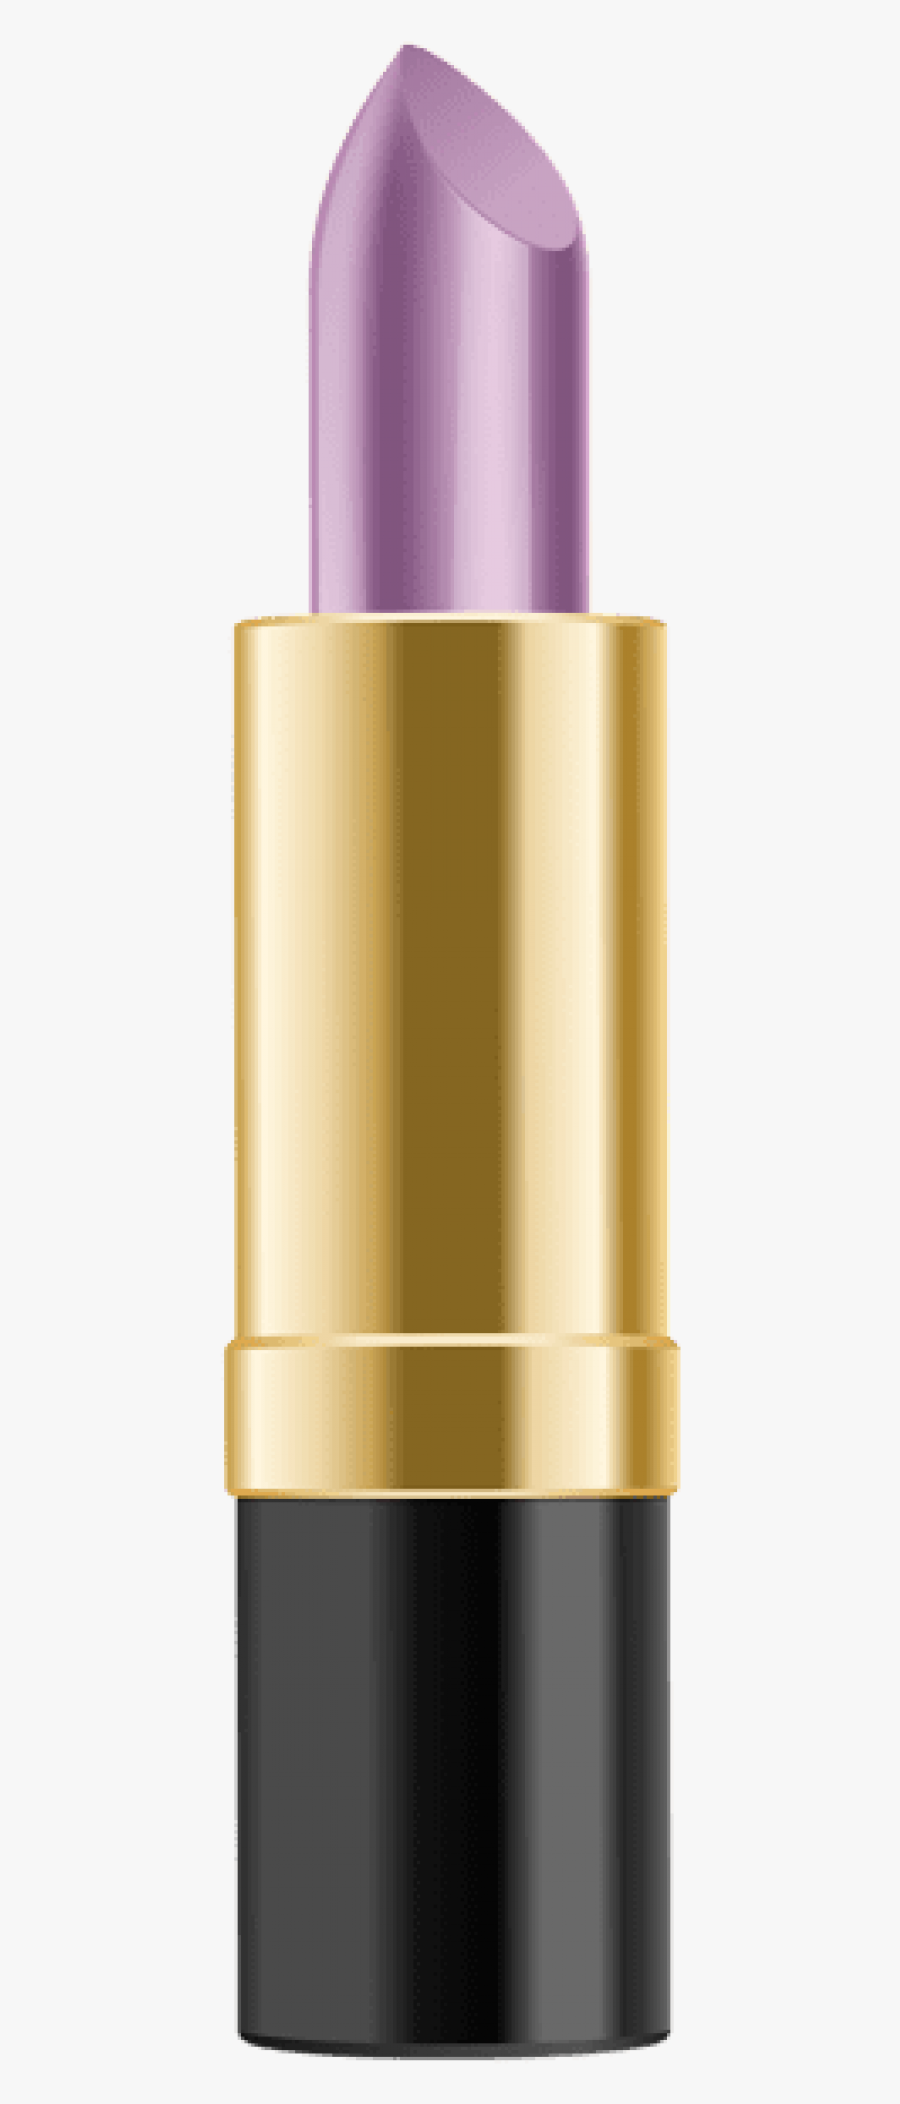 Free Png Download Purple Lipstick Clipart Png Photo - Portable Network Graphics, Transparent Clipart